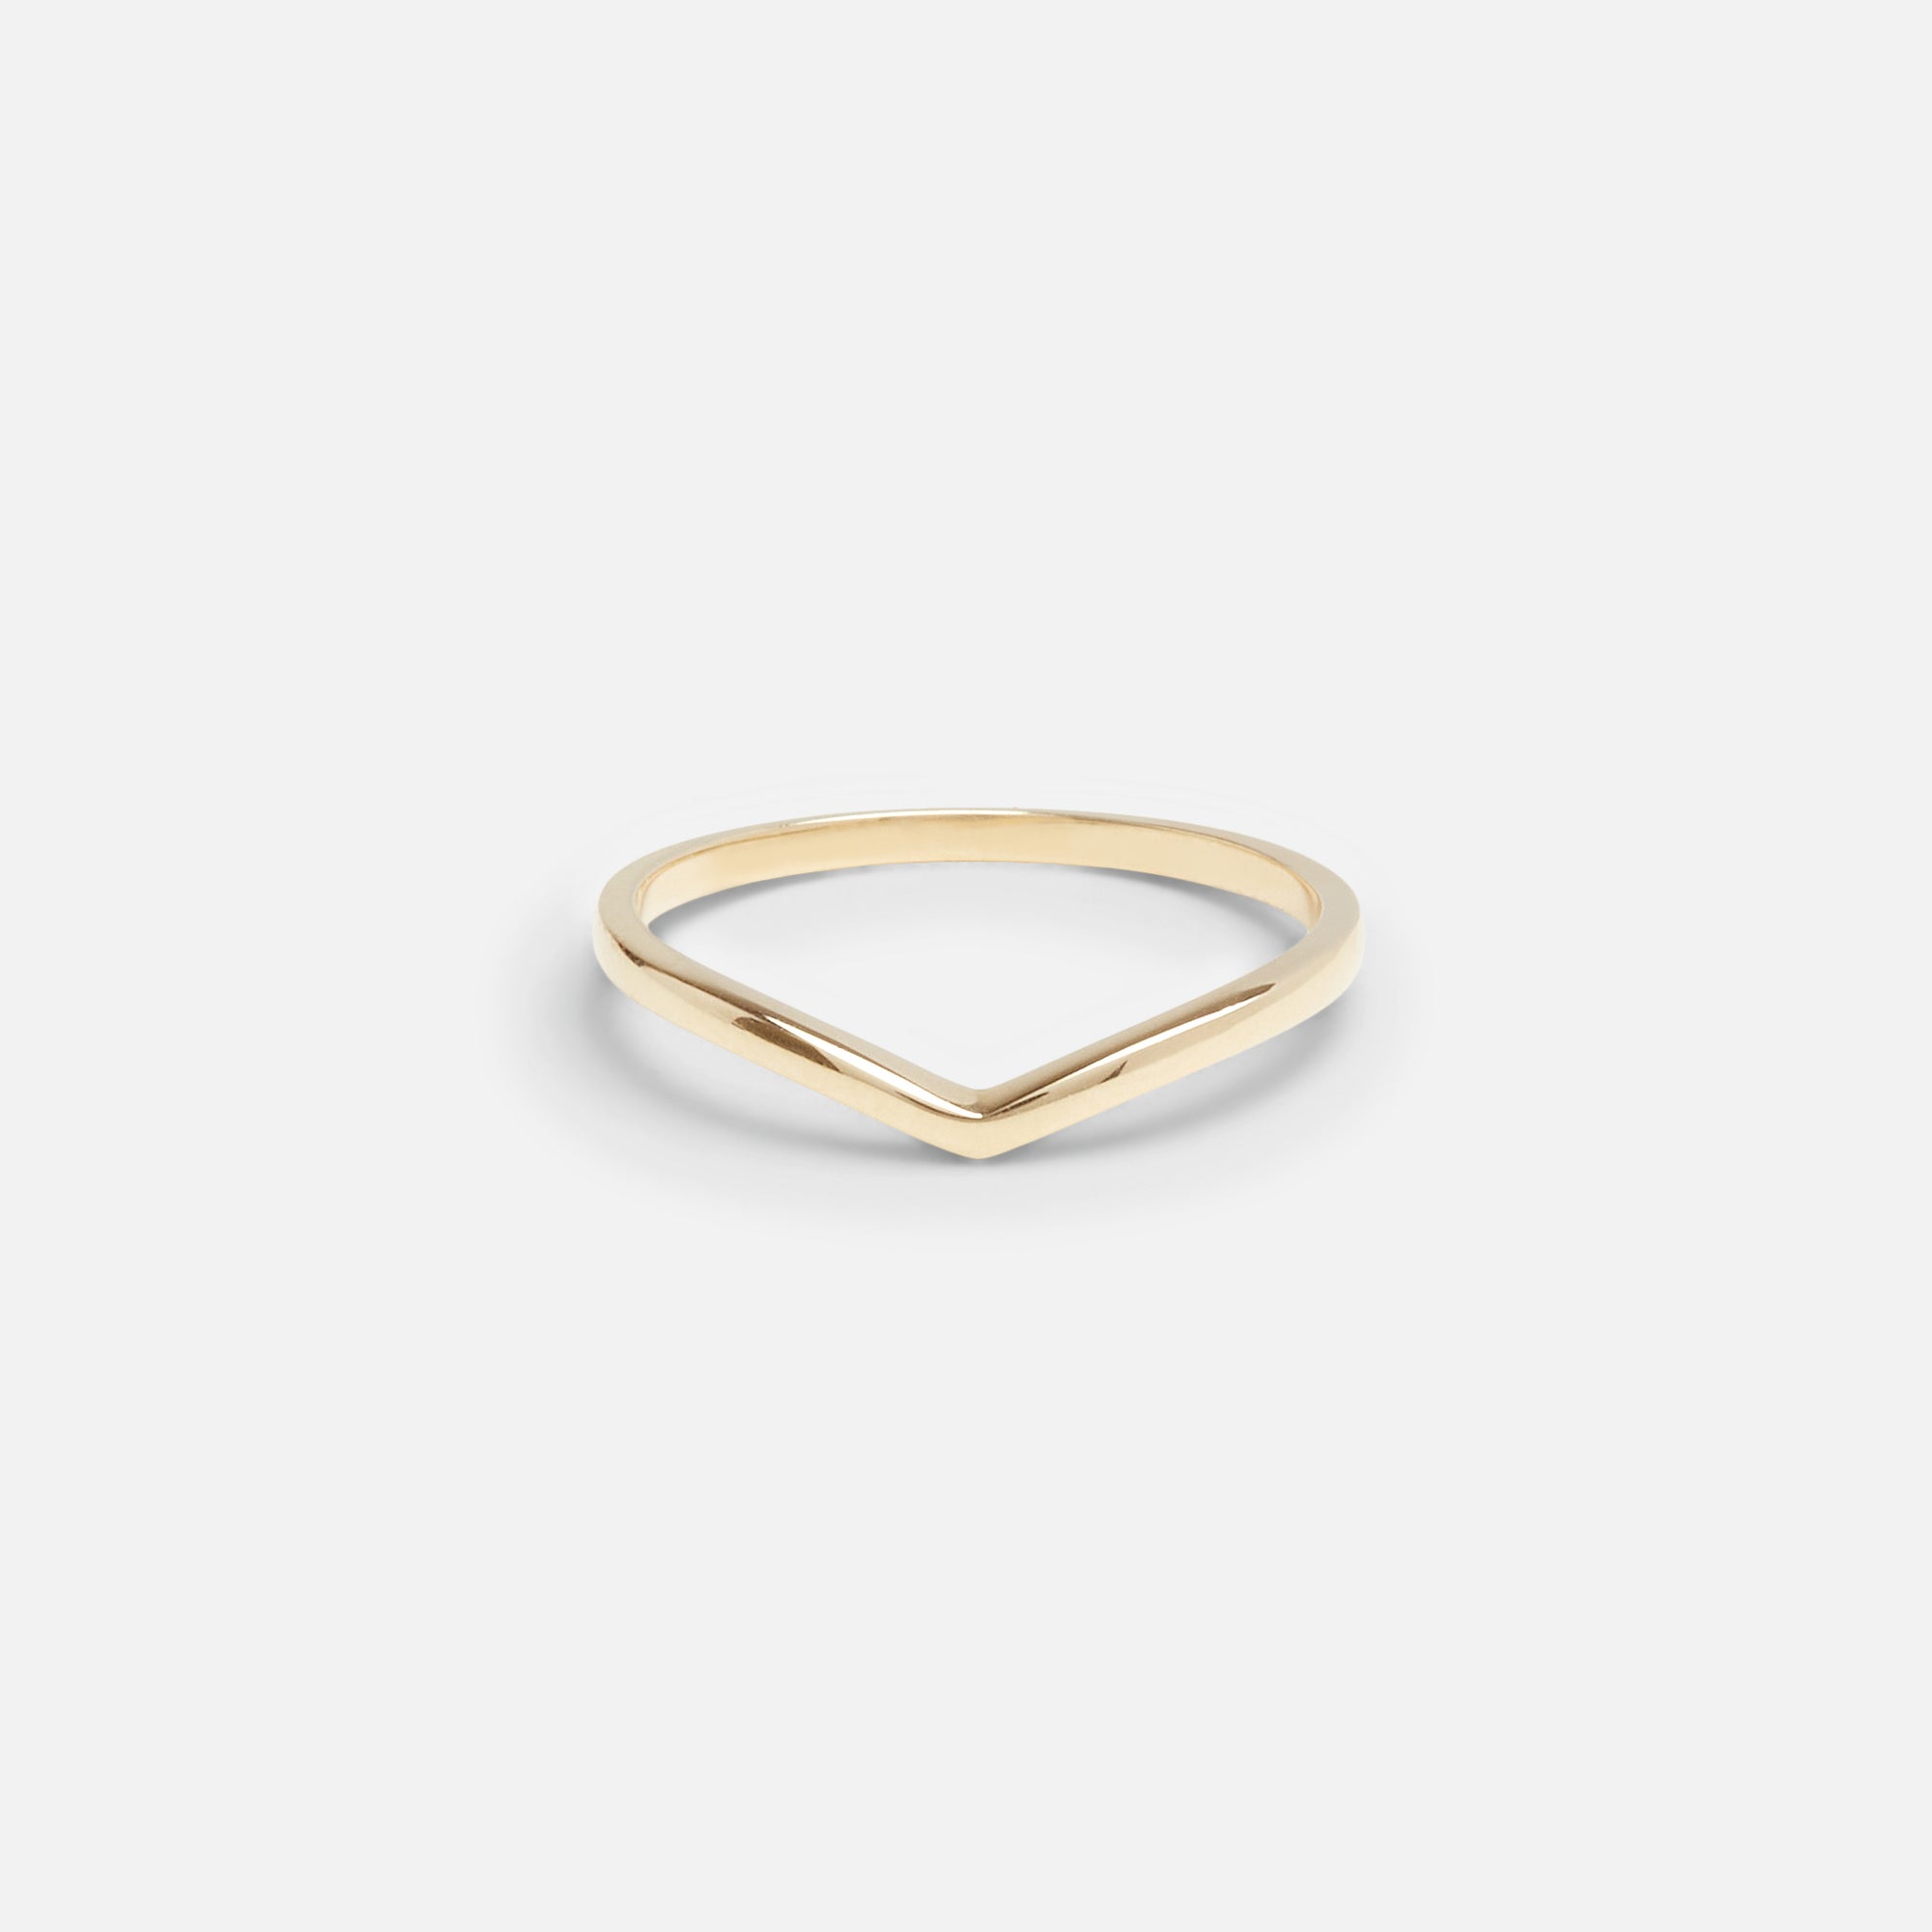 10k yellow gold v-shaped ring